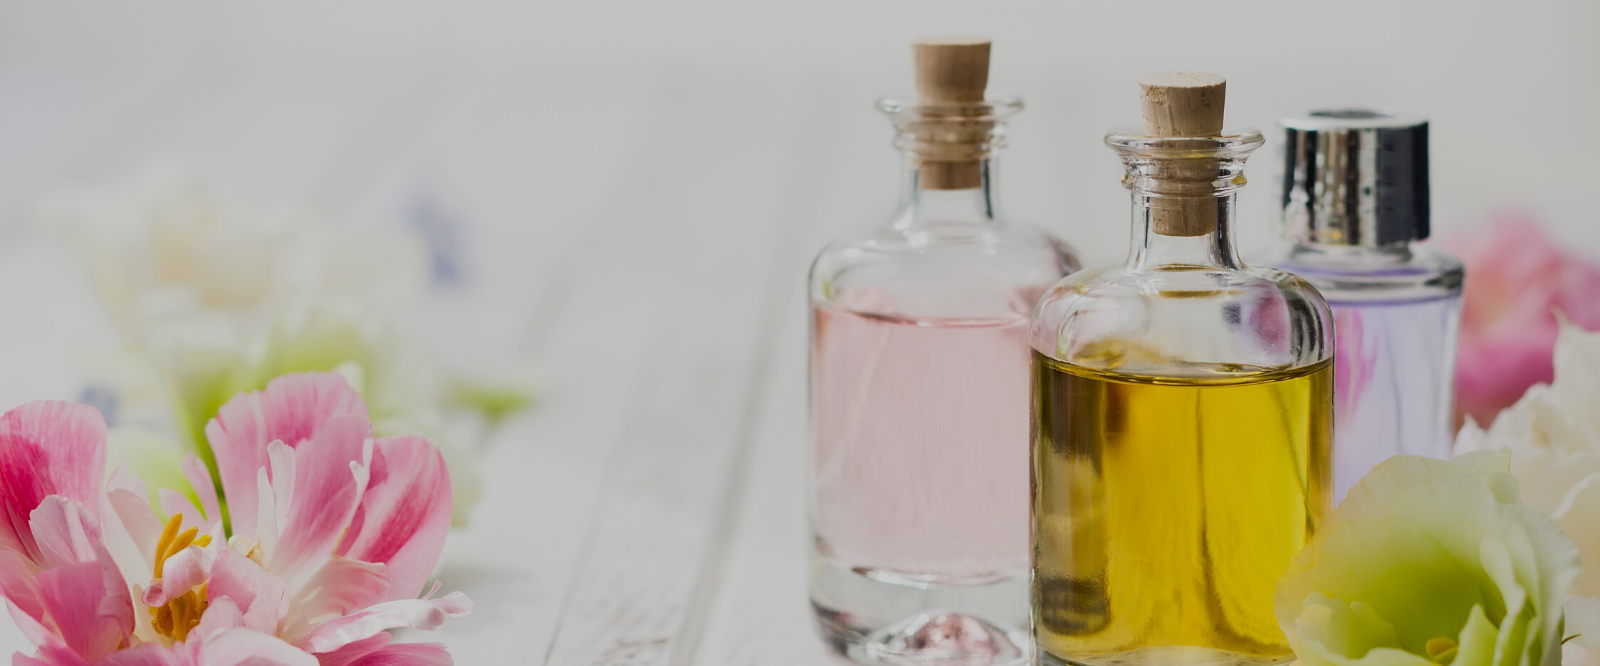 bottle of organic oils for holistic skin care